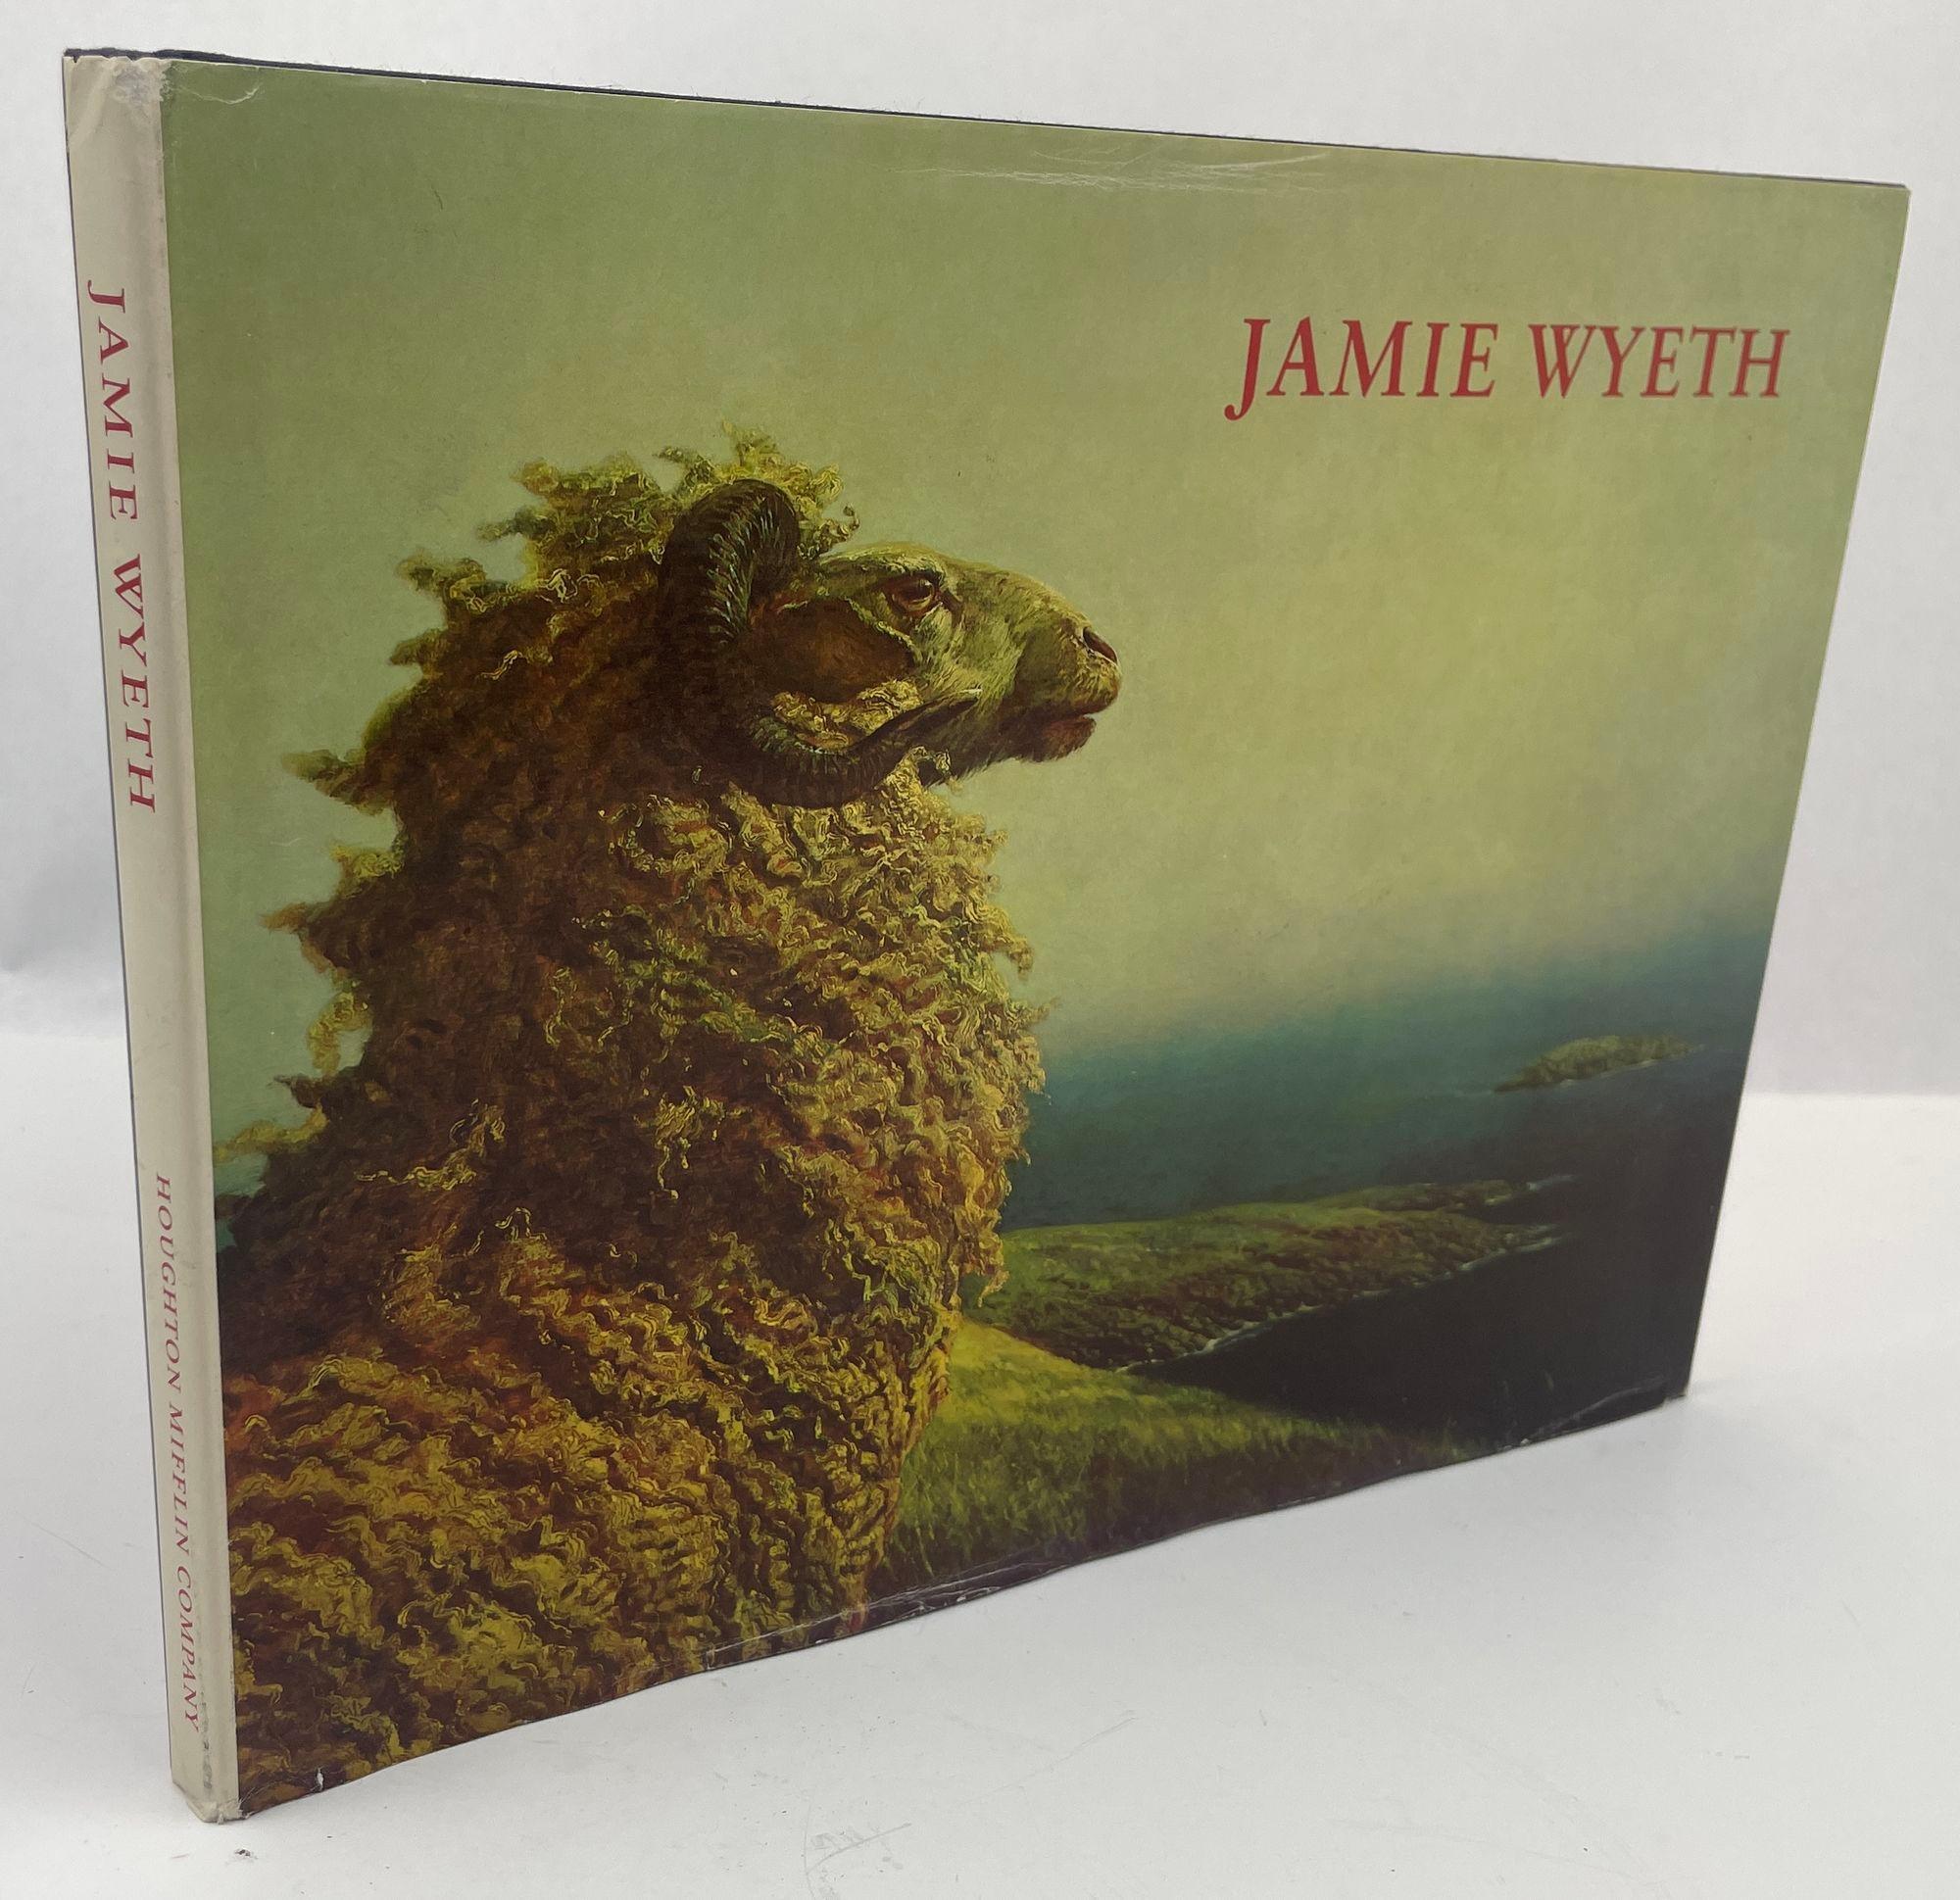 Expressionist Jamie Wyeth by Jamie Wyeth Hardcover Book 1980 1st Ed. For Sale